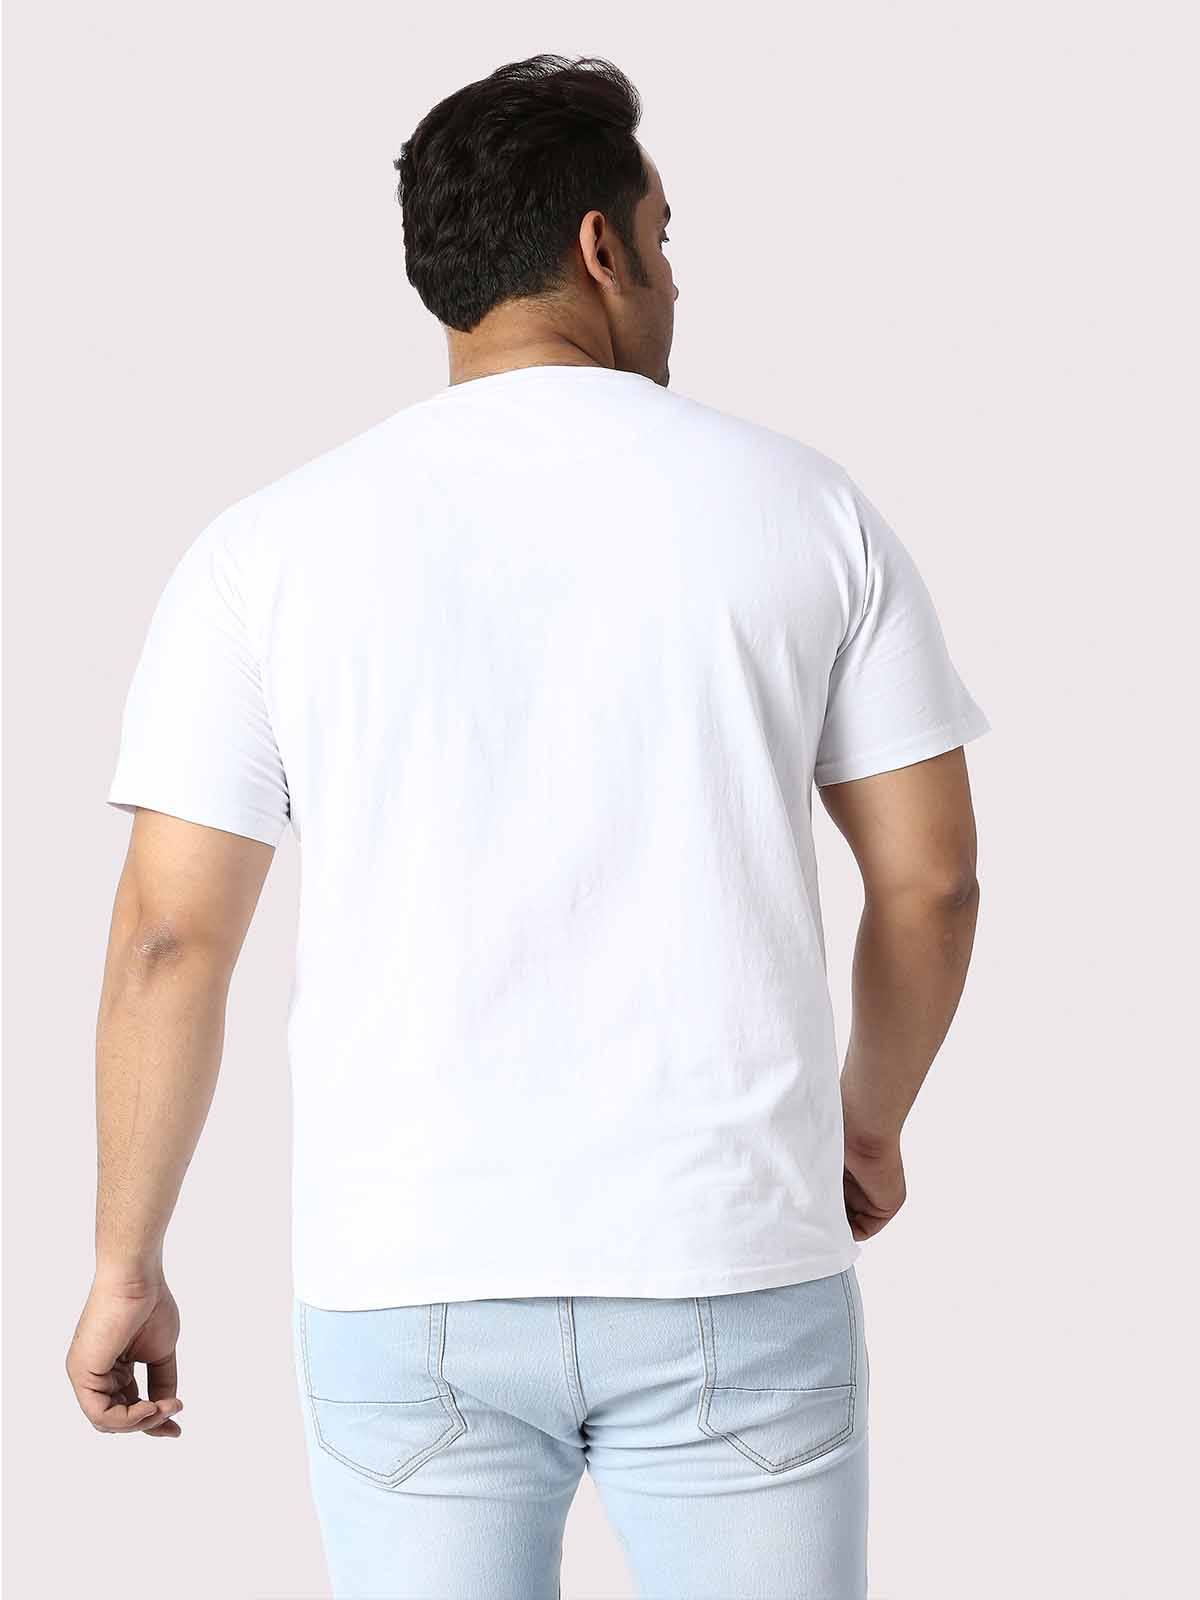 Men Plus Size White Mom Love Printed Round Neck T-Shirt - Guniaa Fashions